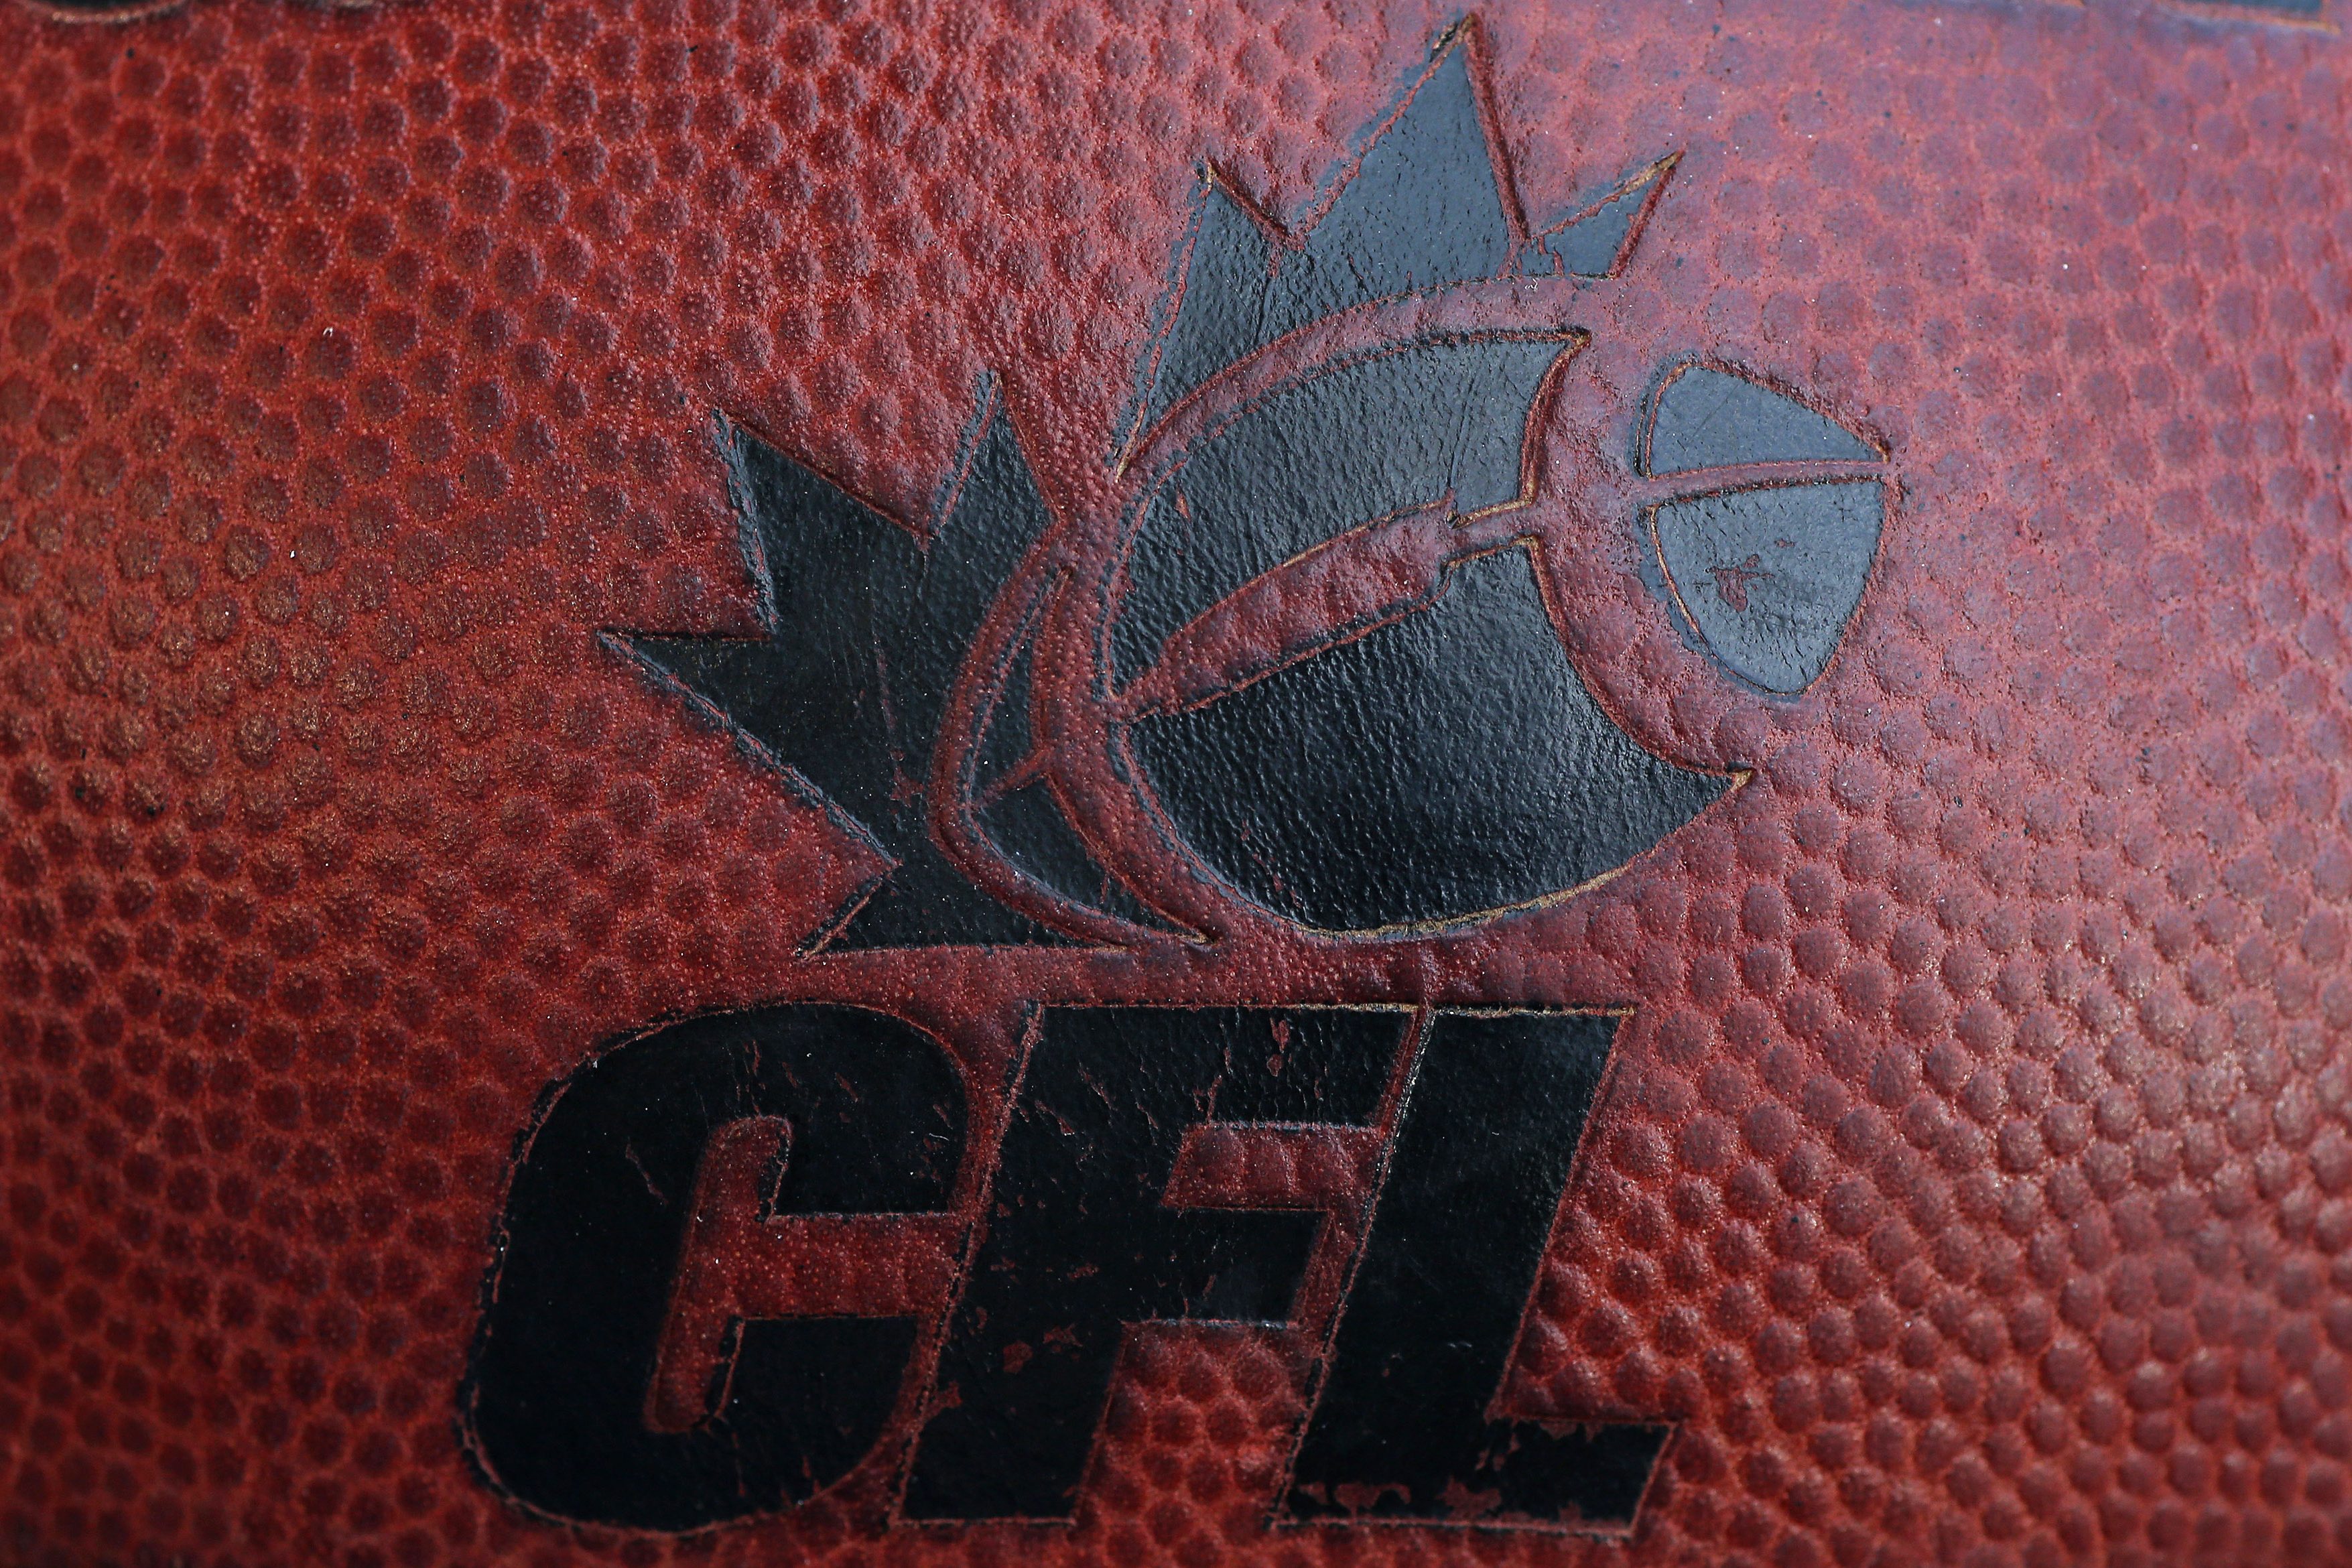 The CFL logo